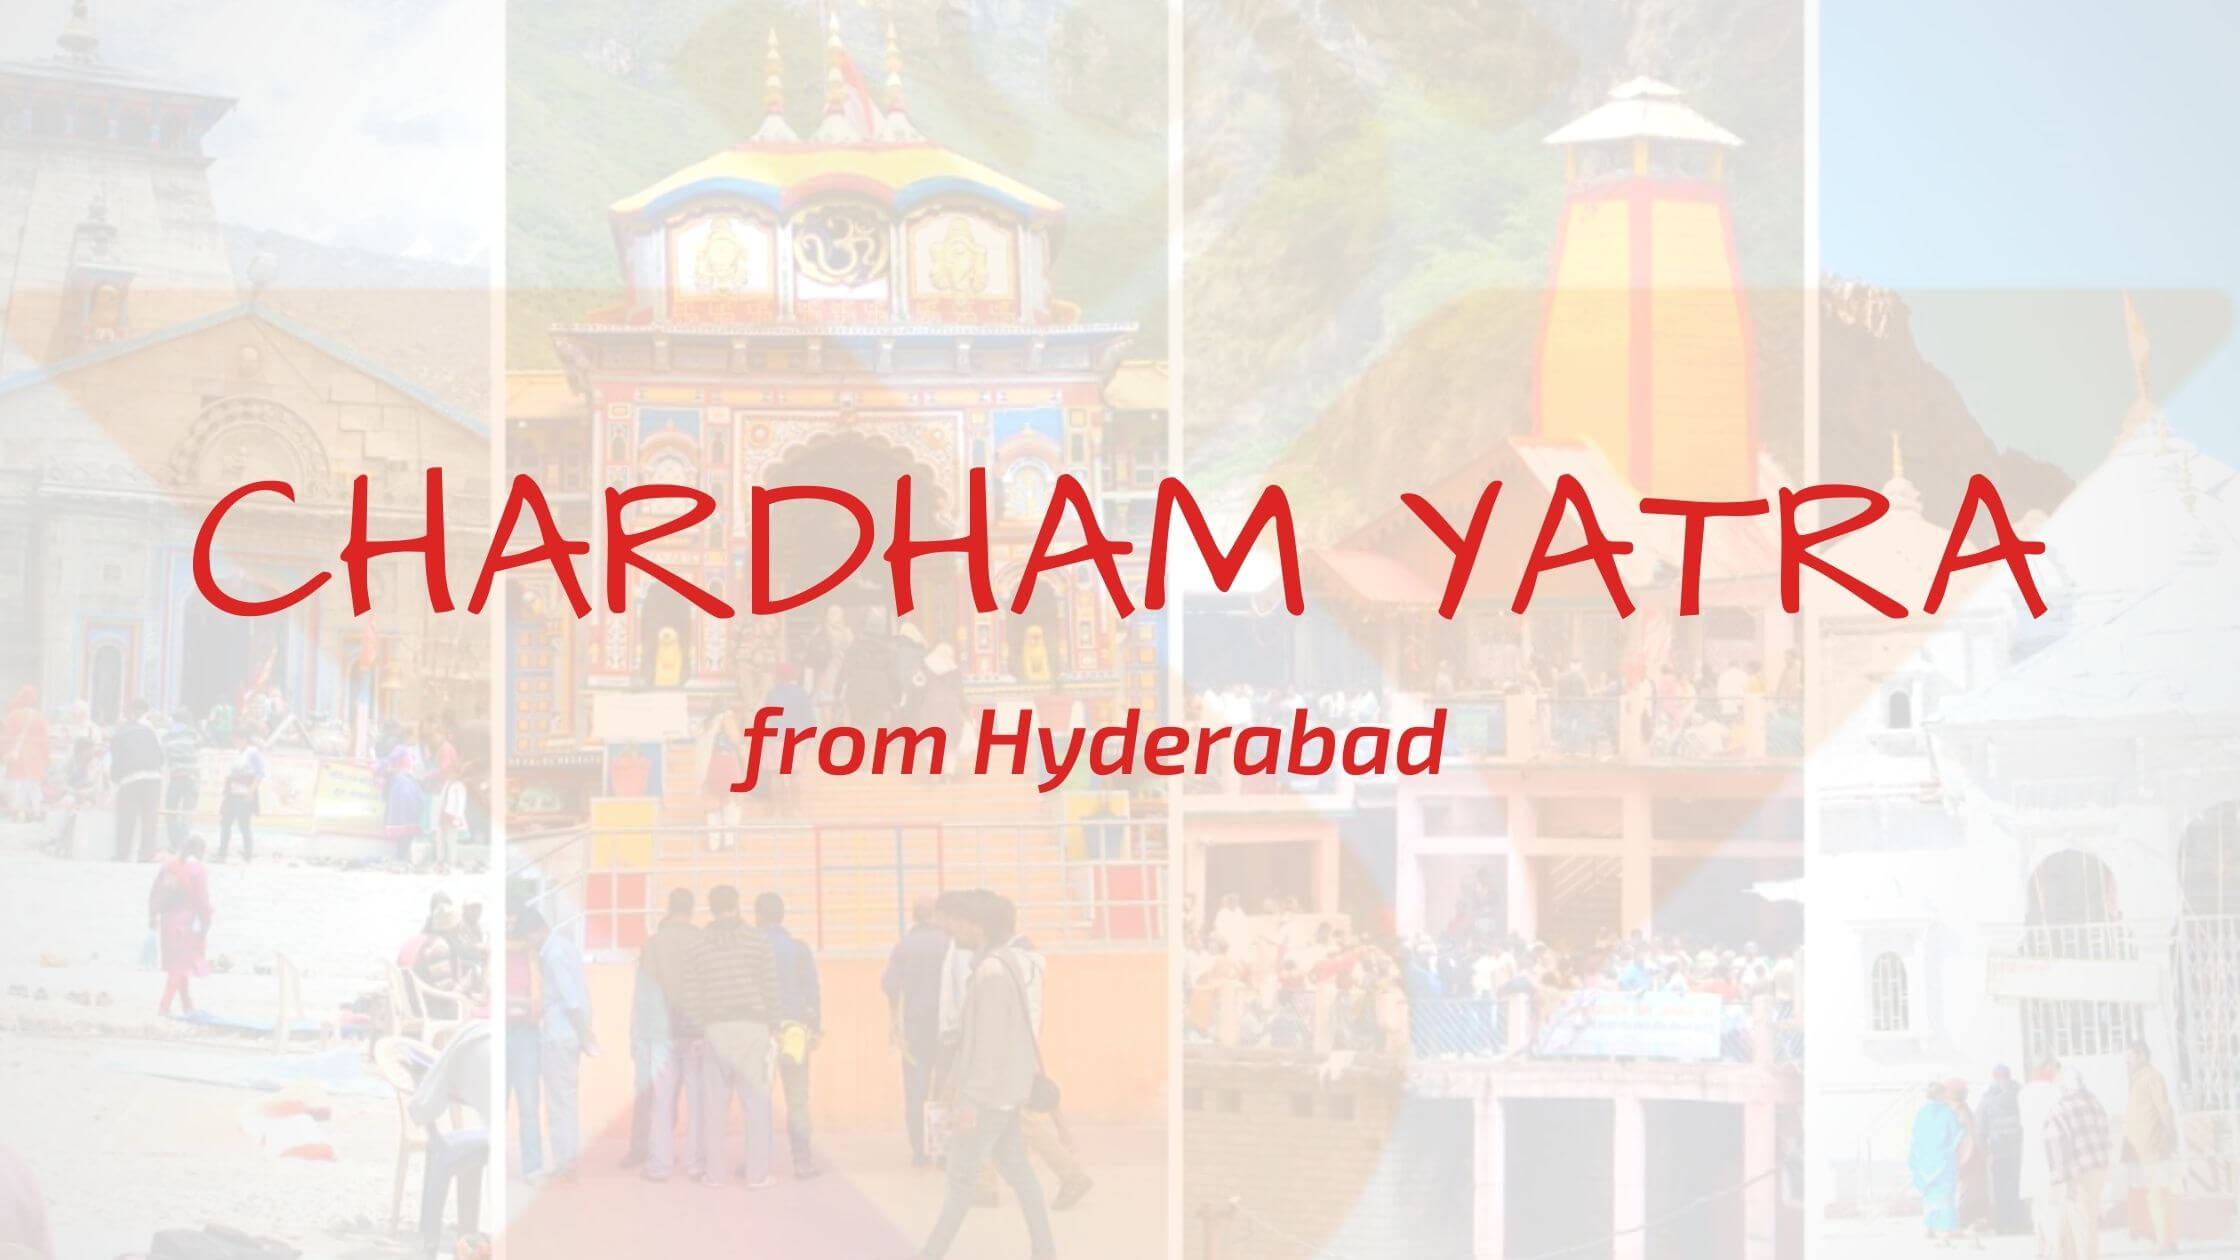 Chardham yatra Tour from Hyderabad